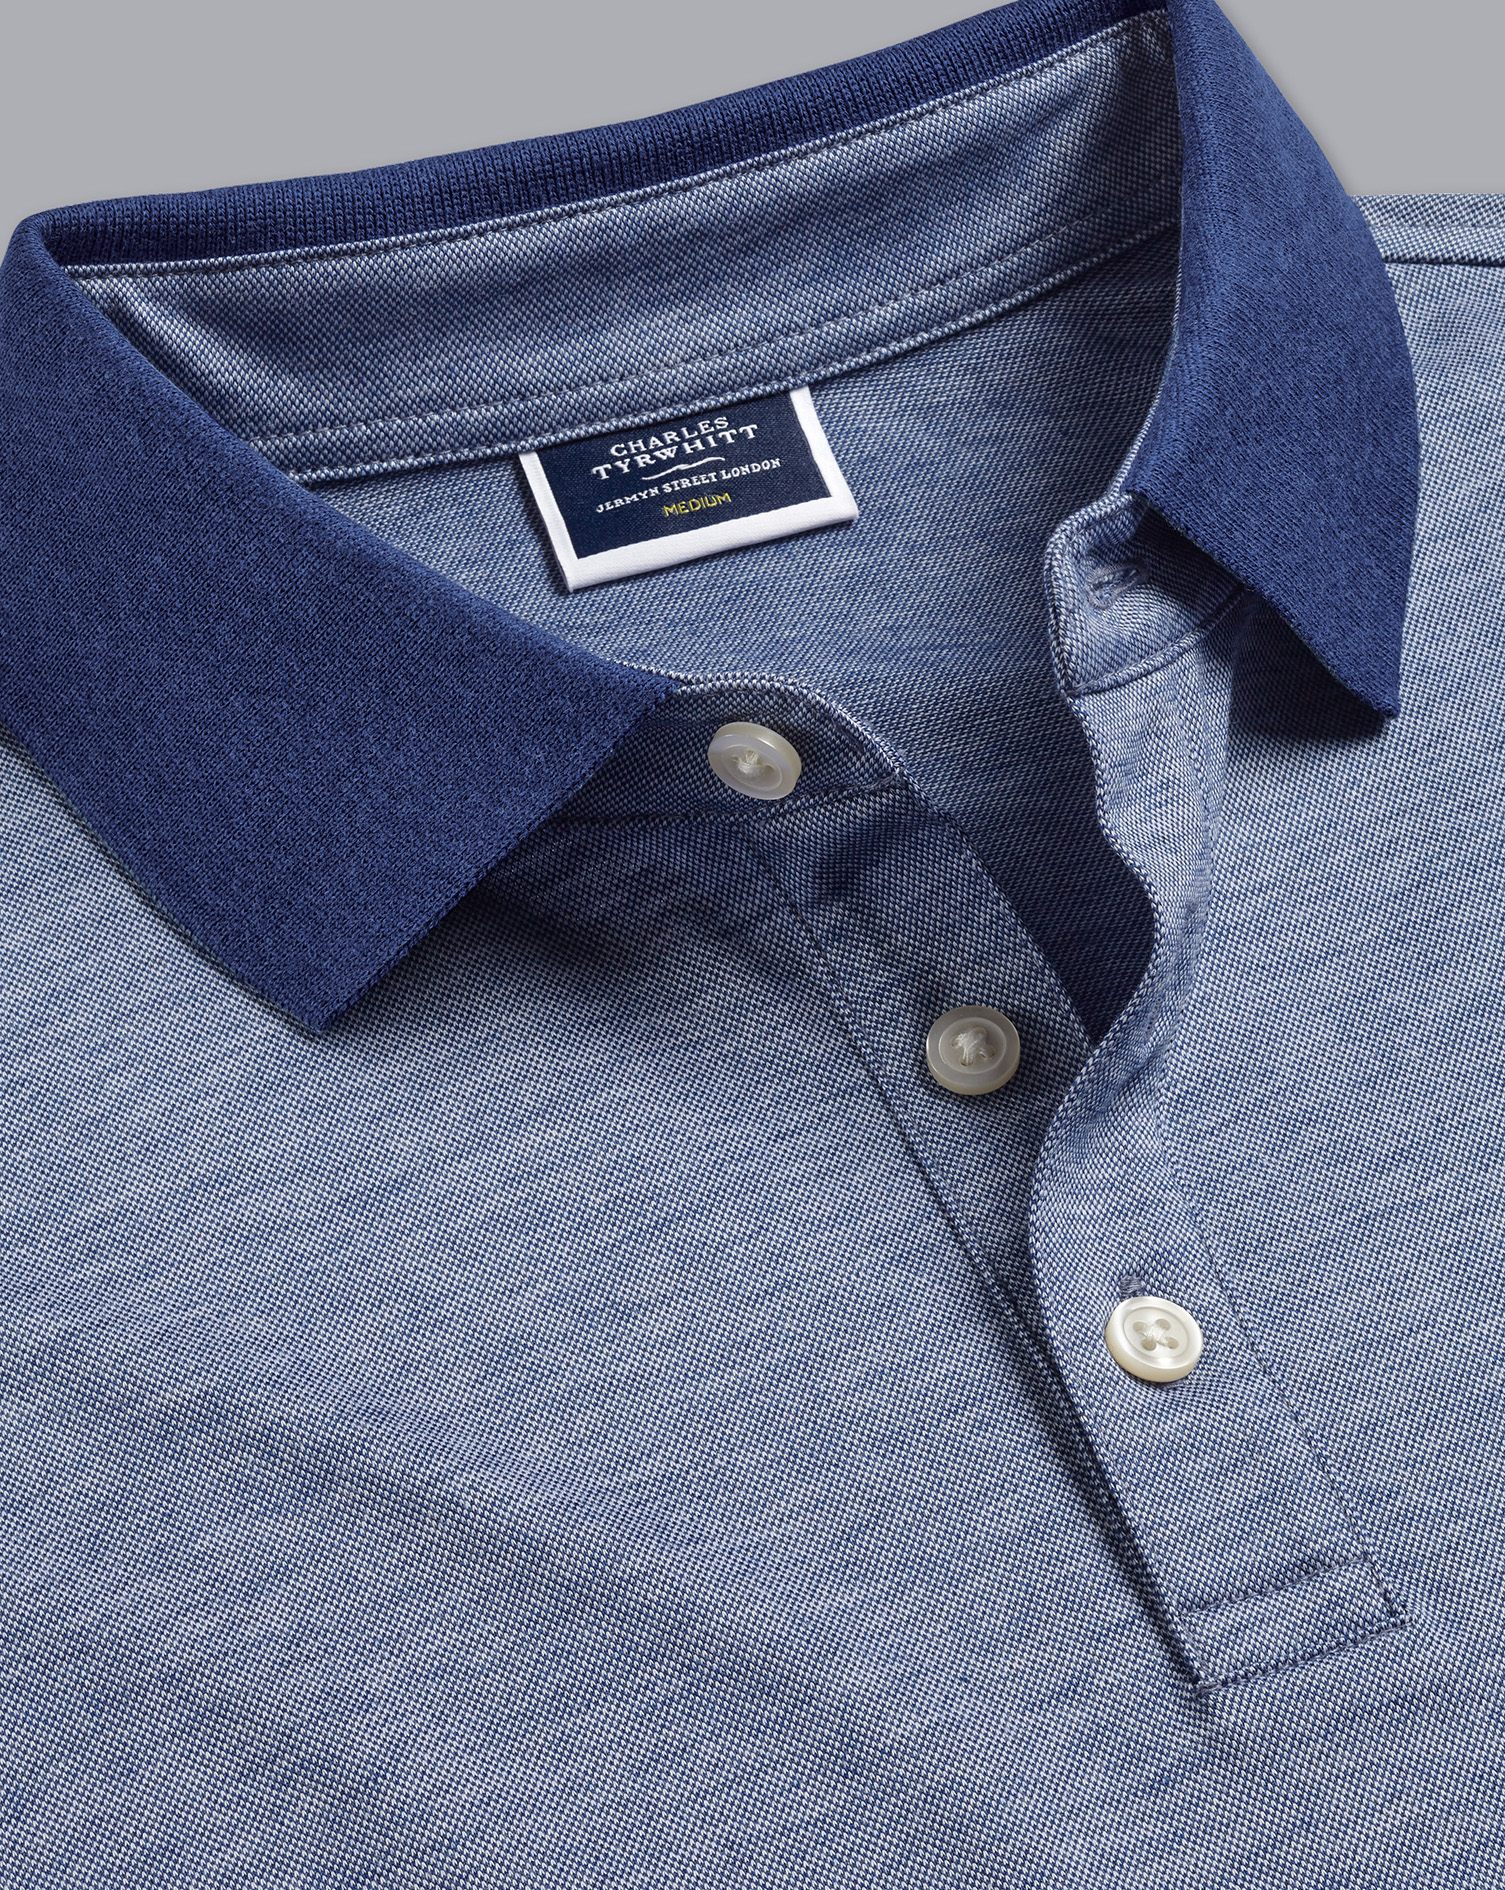 Men's Charles Tyrwhitt Birdseye Pique Polo Shirt - Royal Blue Size Large Cotton
